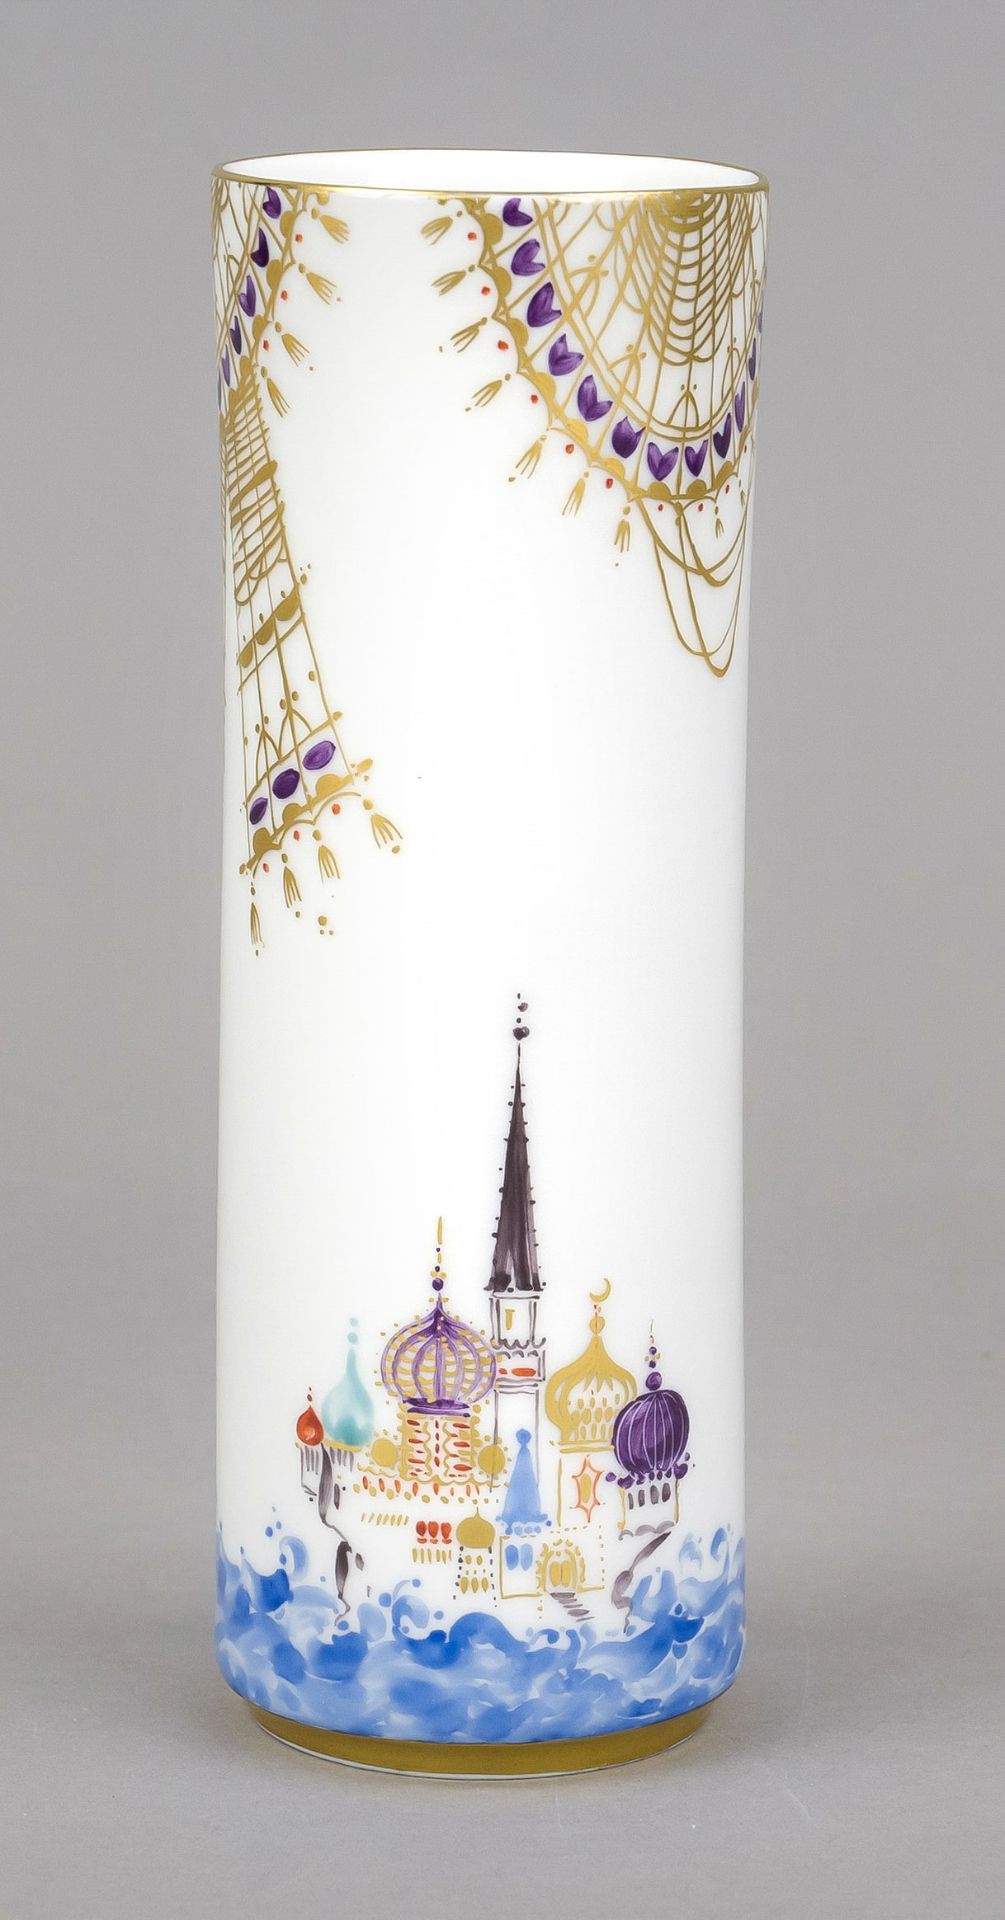 Vase, Meissen, mark 1972-80, 1st choice, designed by Ludwig Zepner and Heinz Werner, pole form, ' - Image 2 of 3